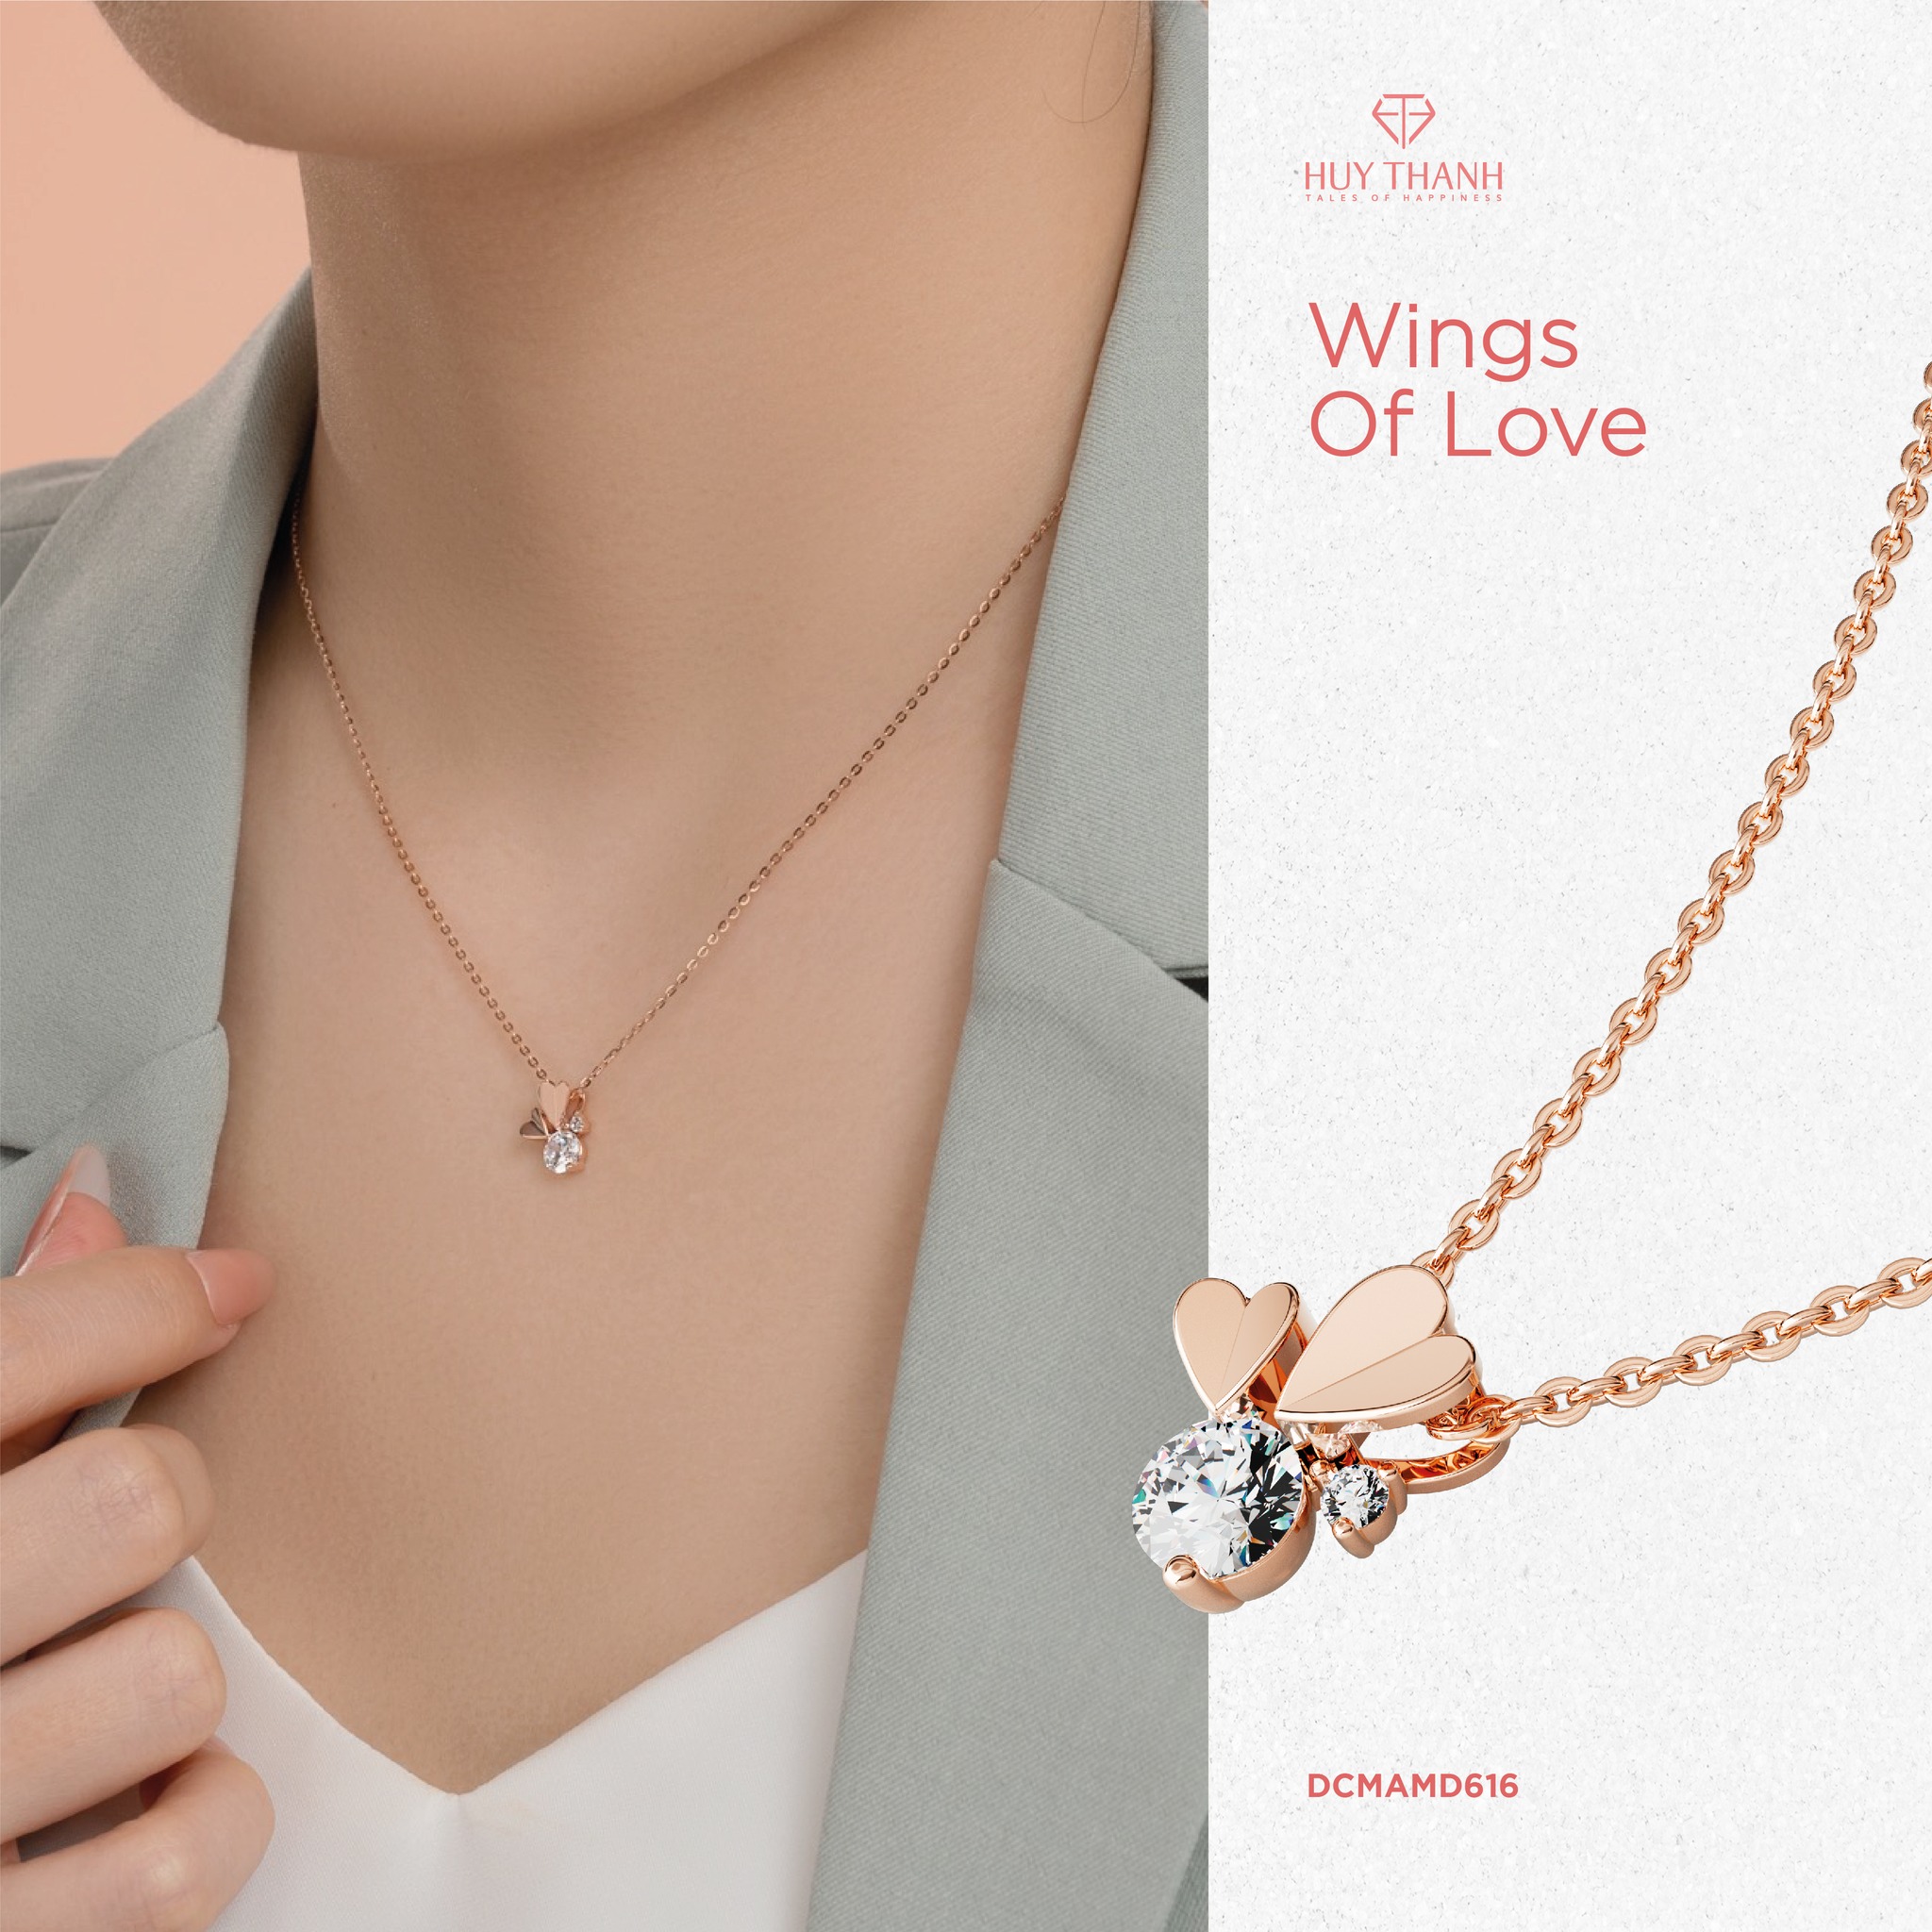 Dây Chuyền Vàng Tây 14k Wings Of Love DCMAMD616 Huy Thanh Jewelry